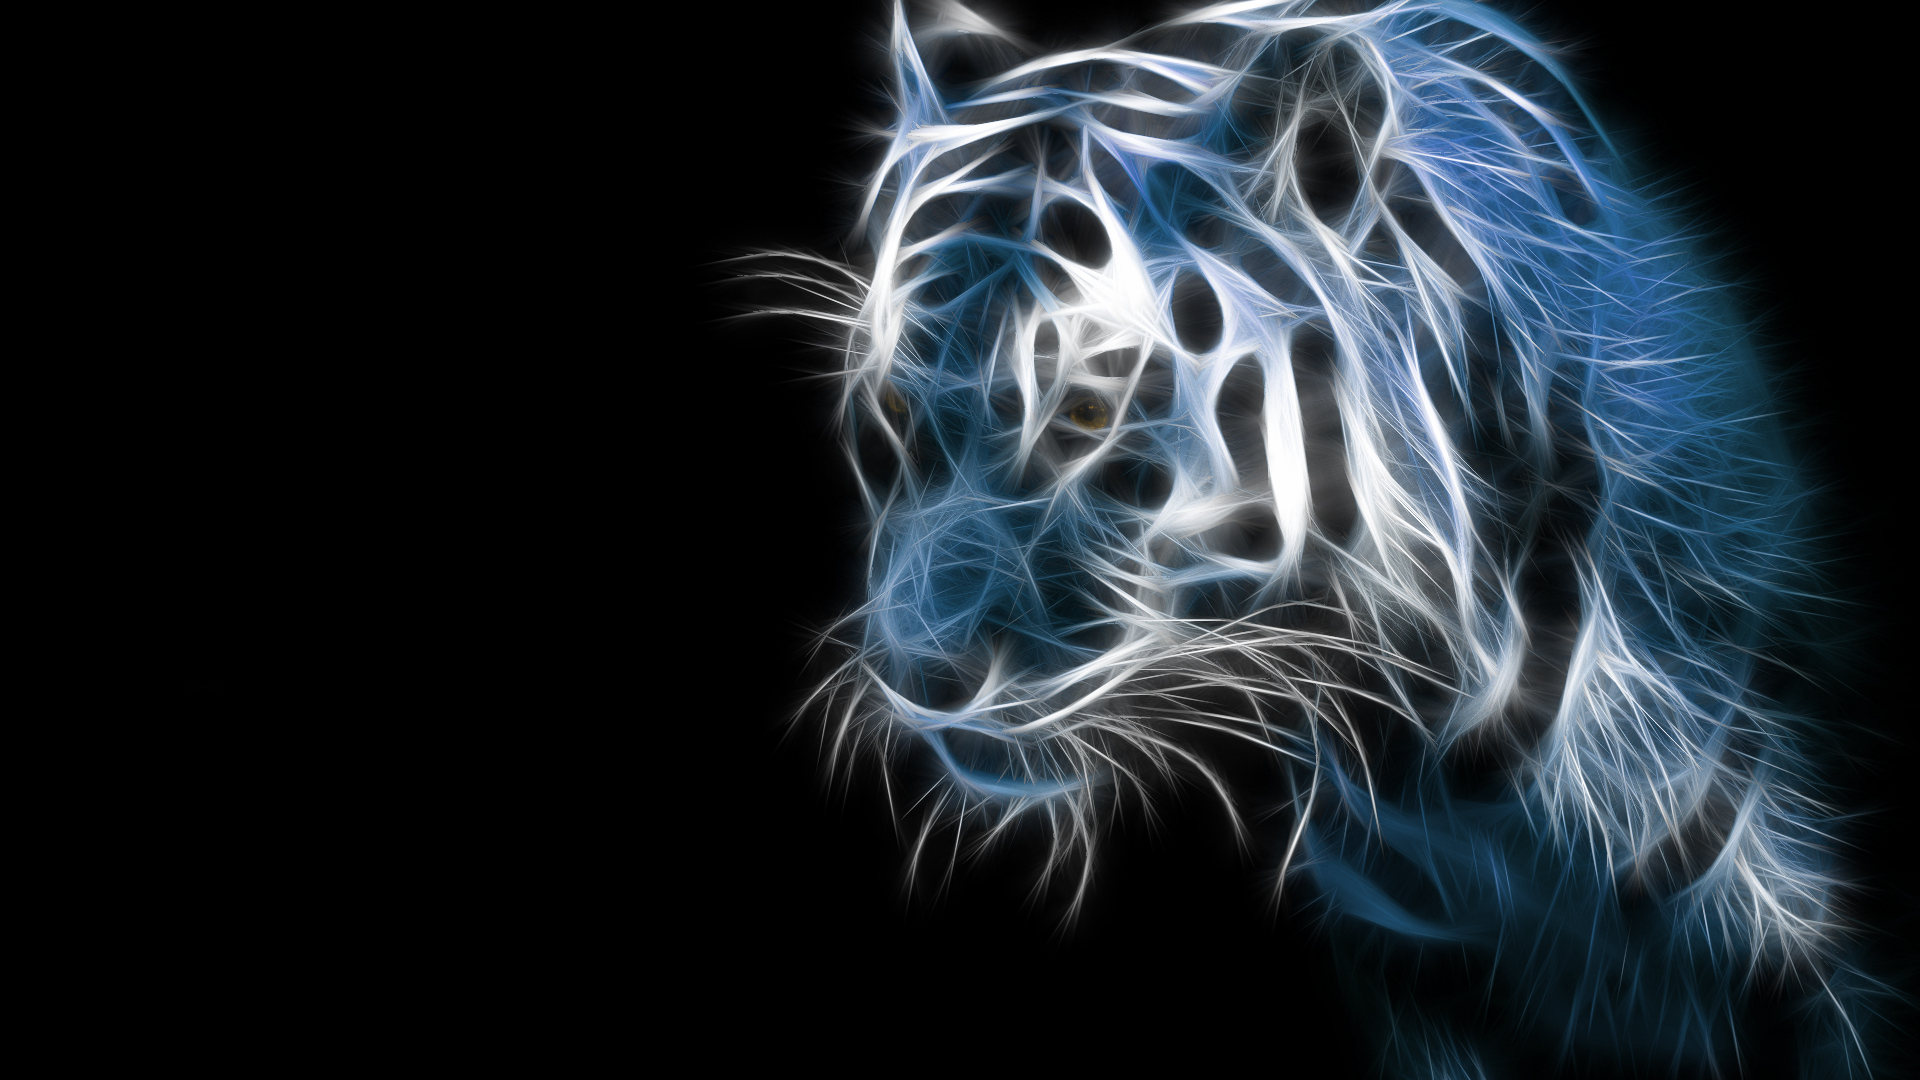 tiger animal desktop wallpaper download tiger animal wallpaper in hd 1920x1080